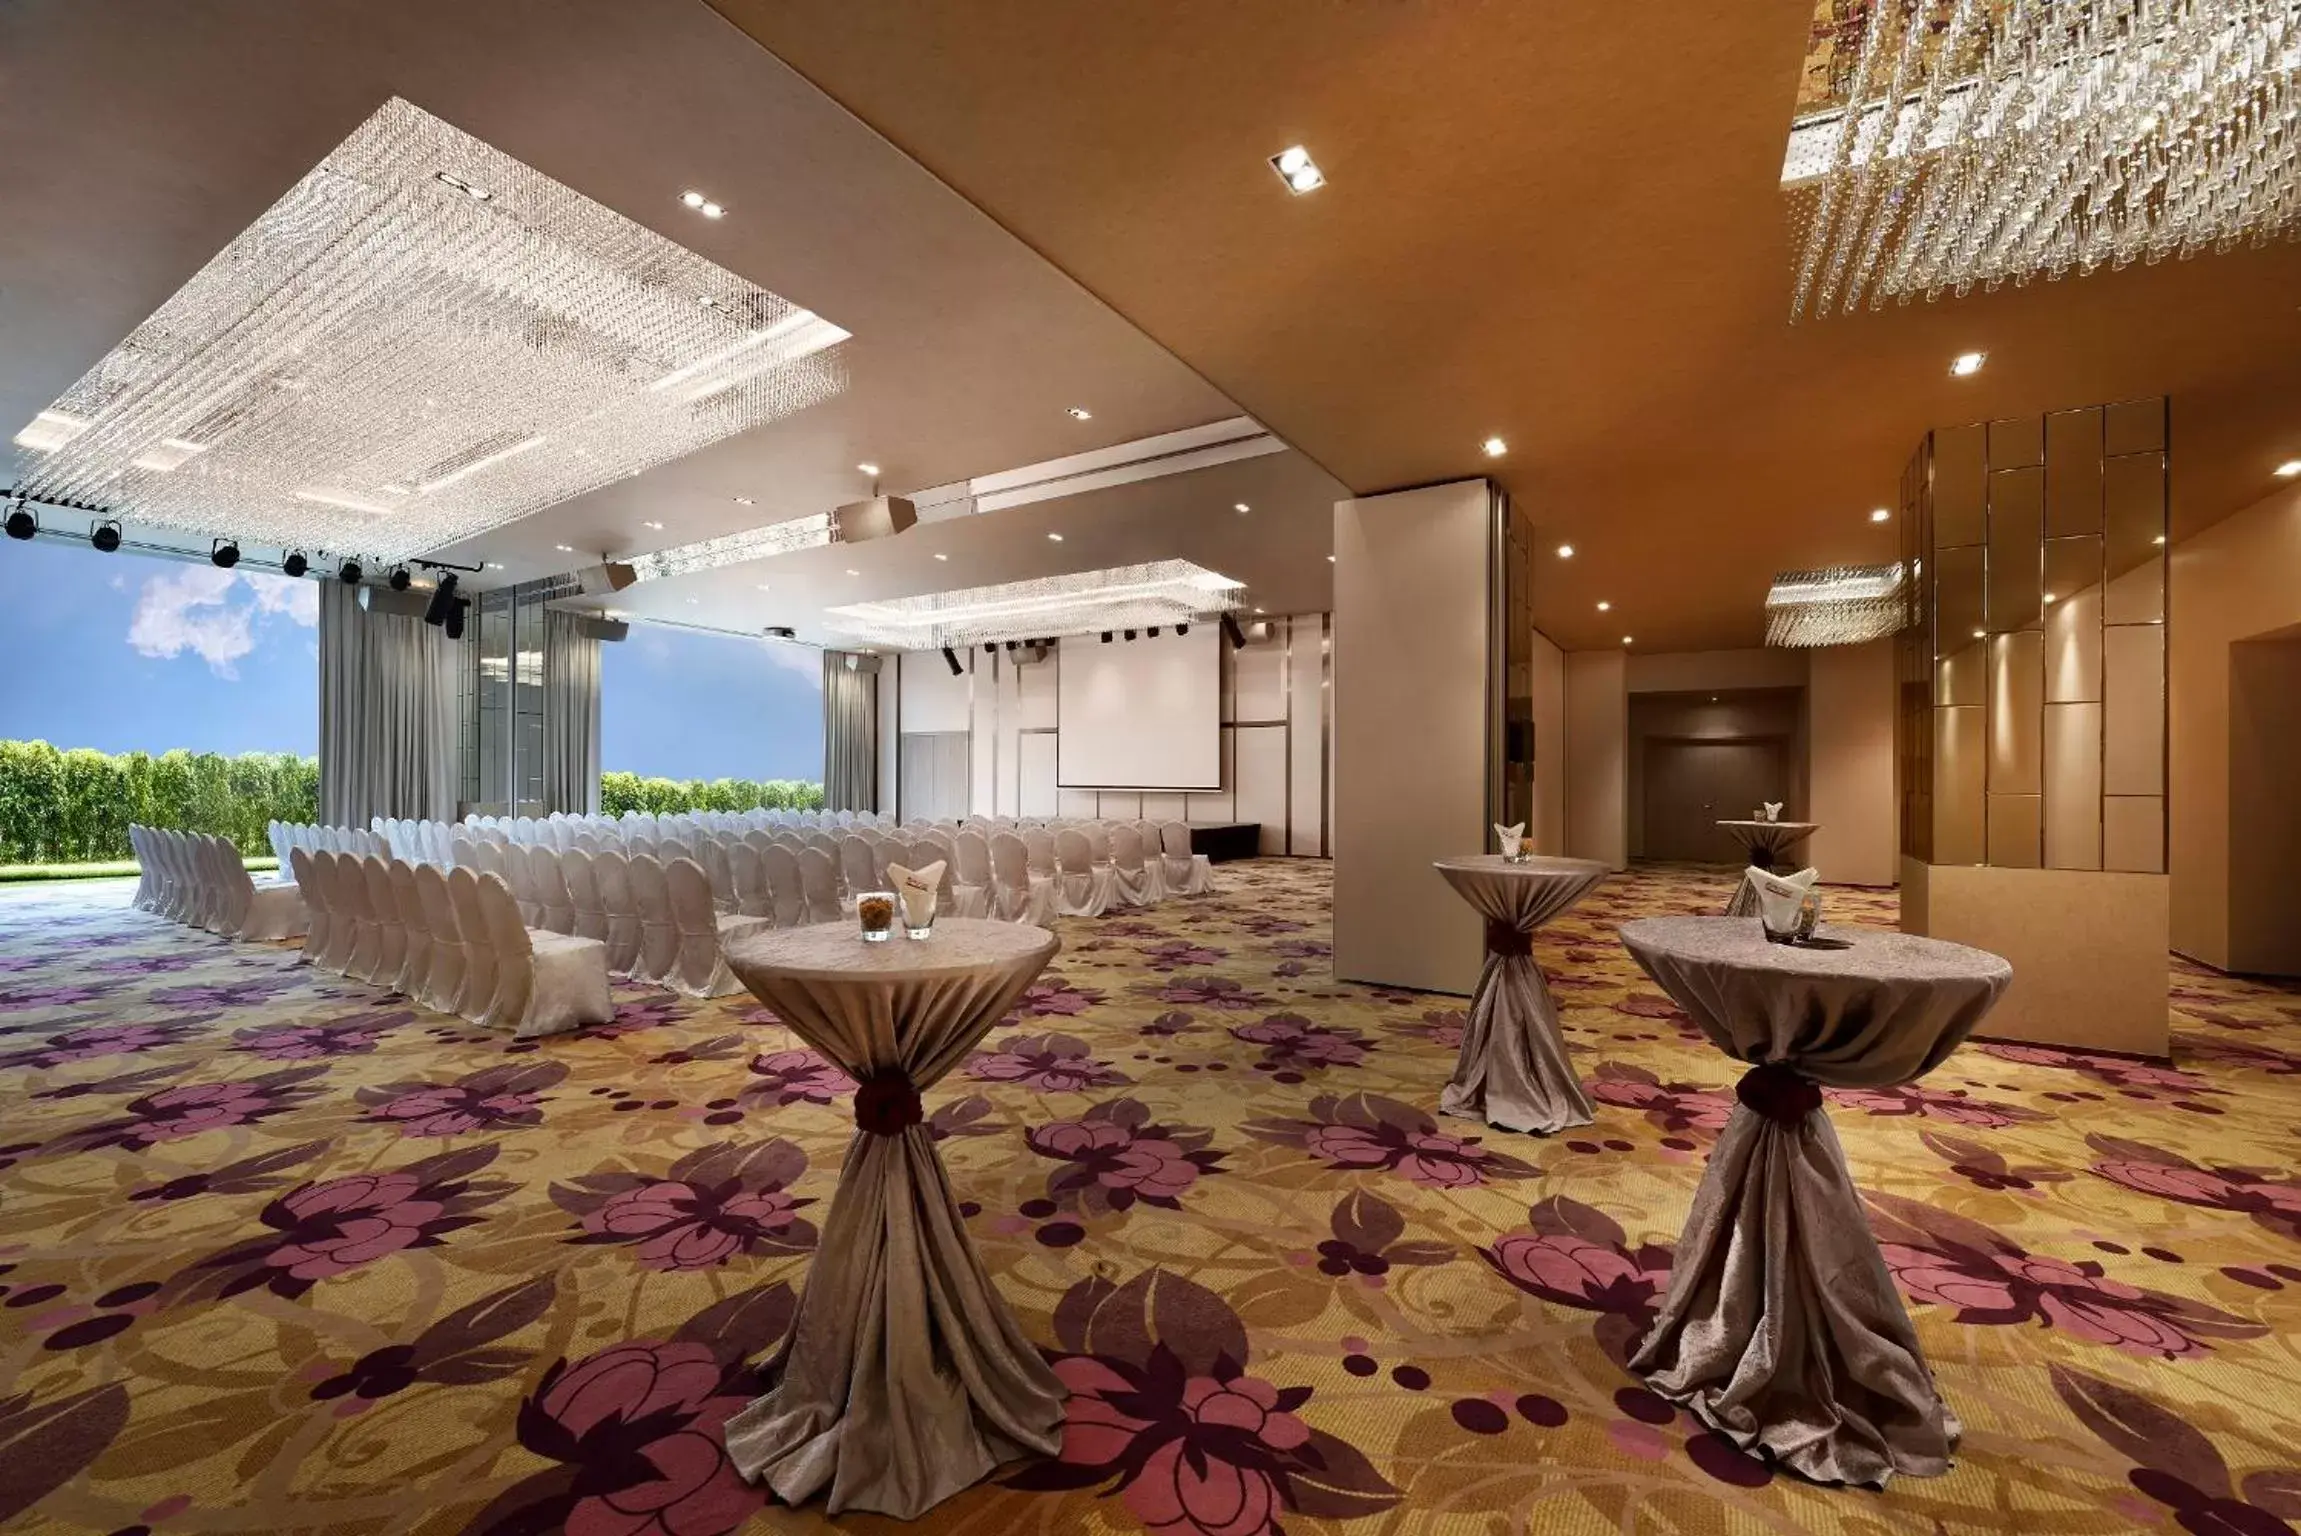 Banquet/Function facilities, Banquet Facilities in Genting Hotel Jurong